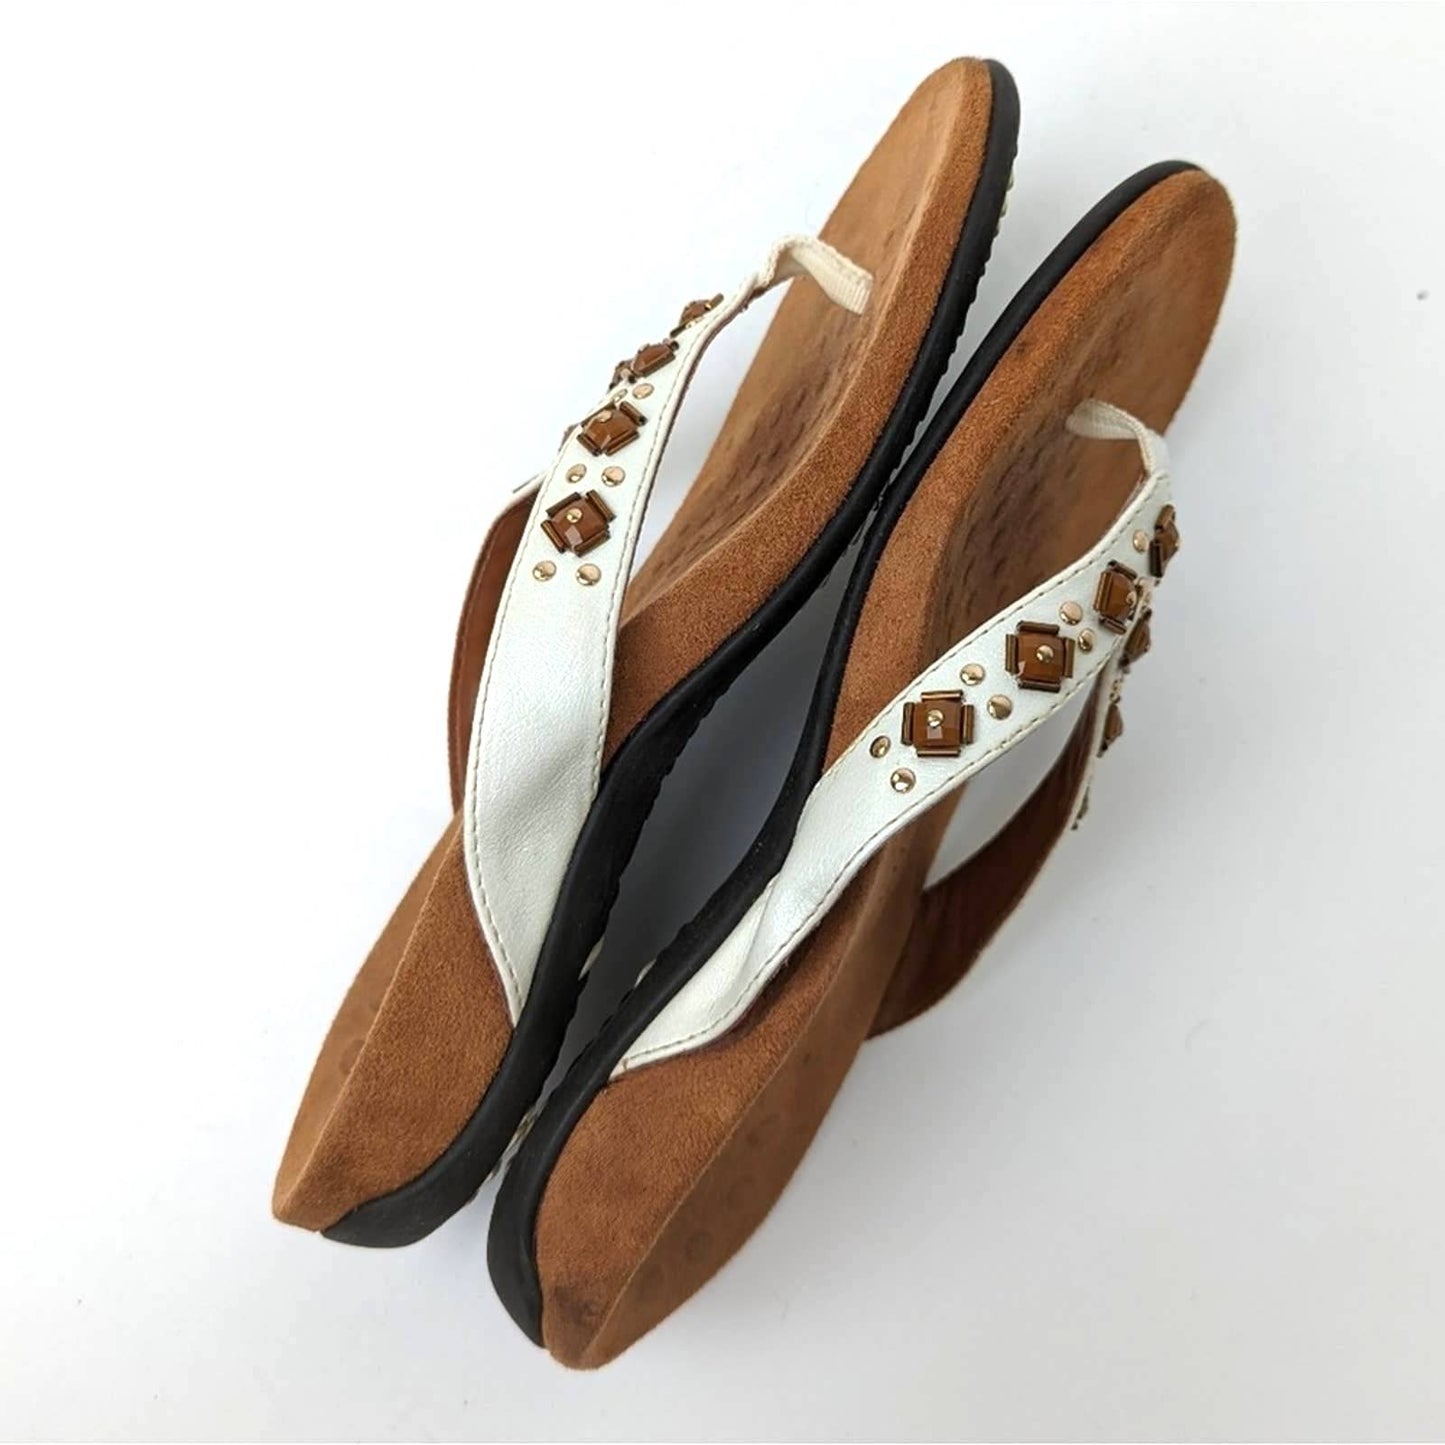 Vionic Floriana Geometric Stone Beaded Flip Flop Sandals - 6